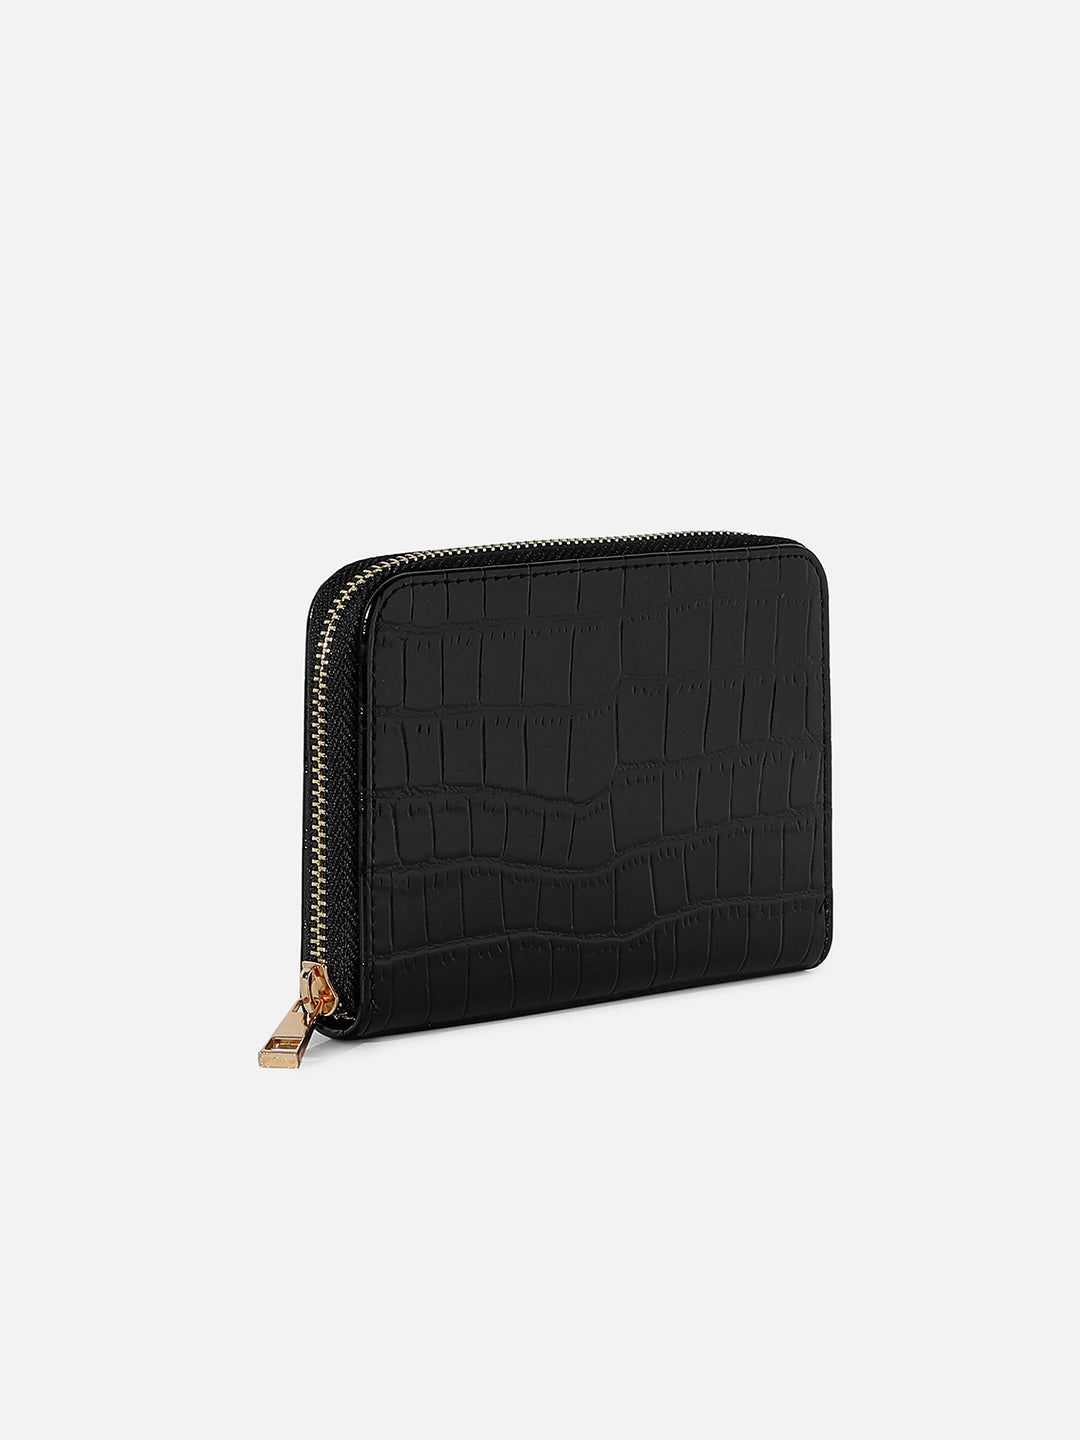 Black Textured Vegan Leather Wallet